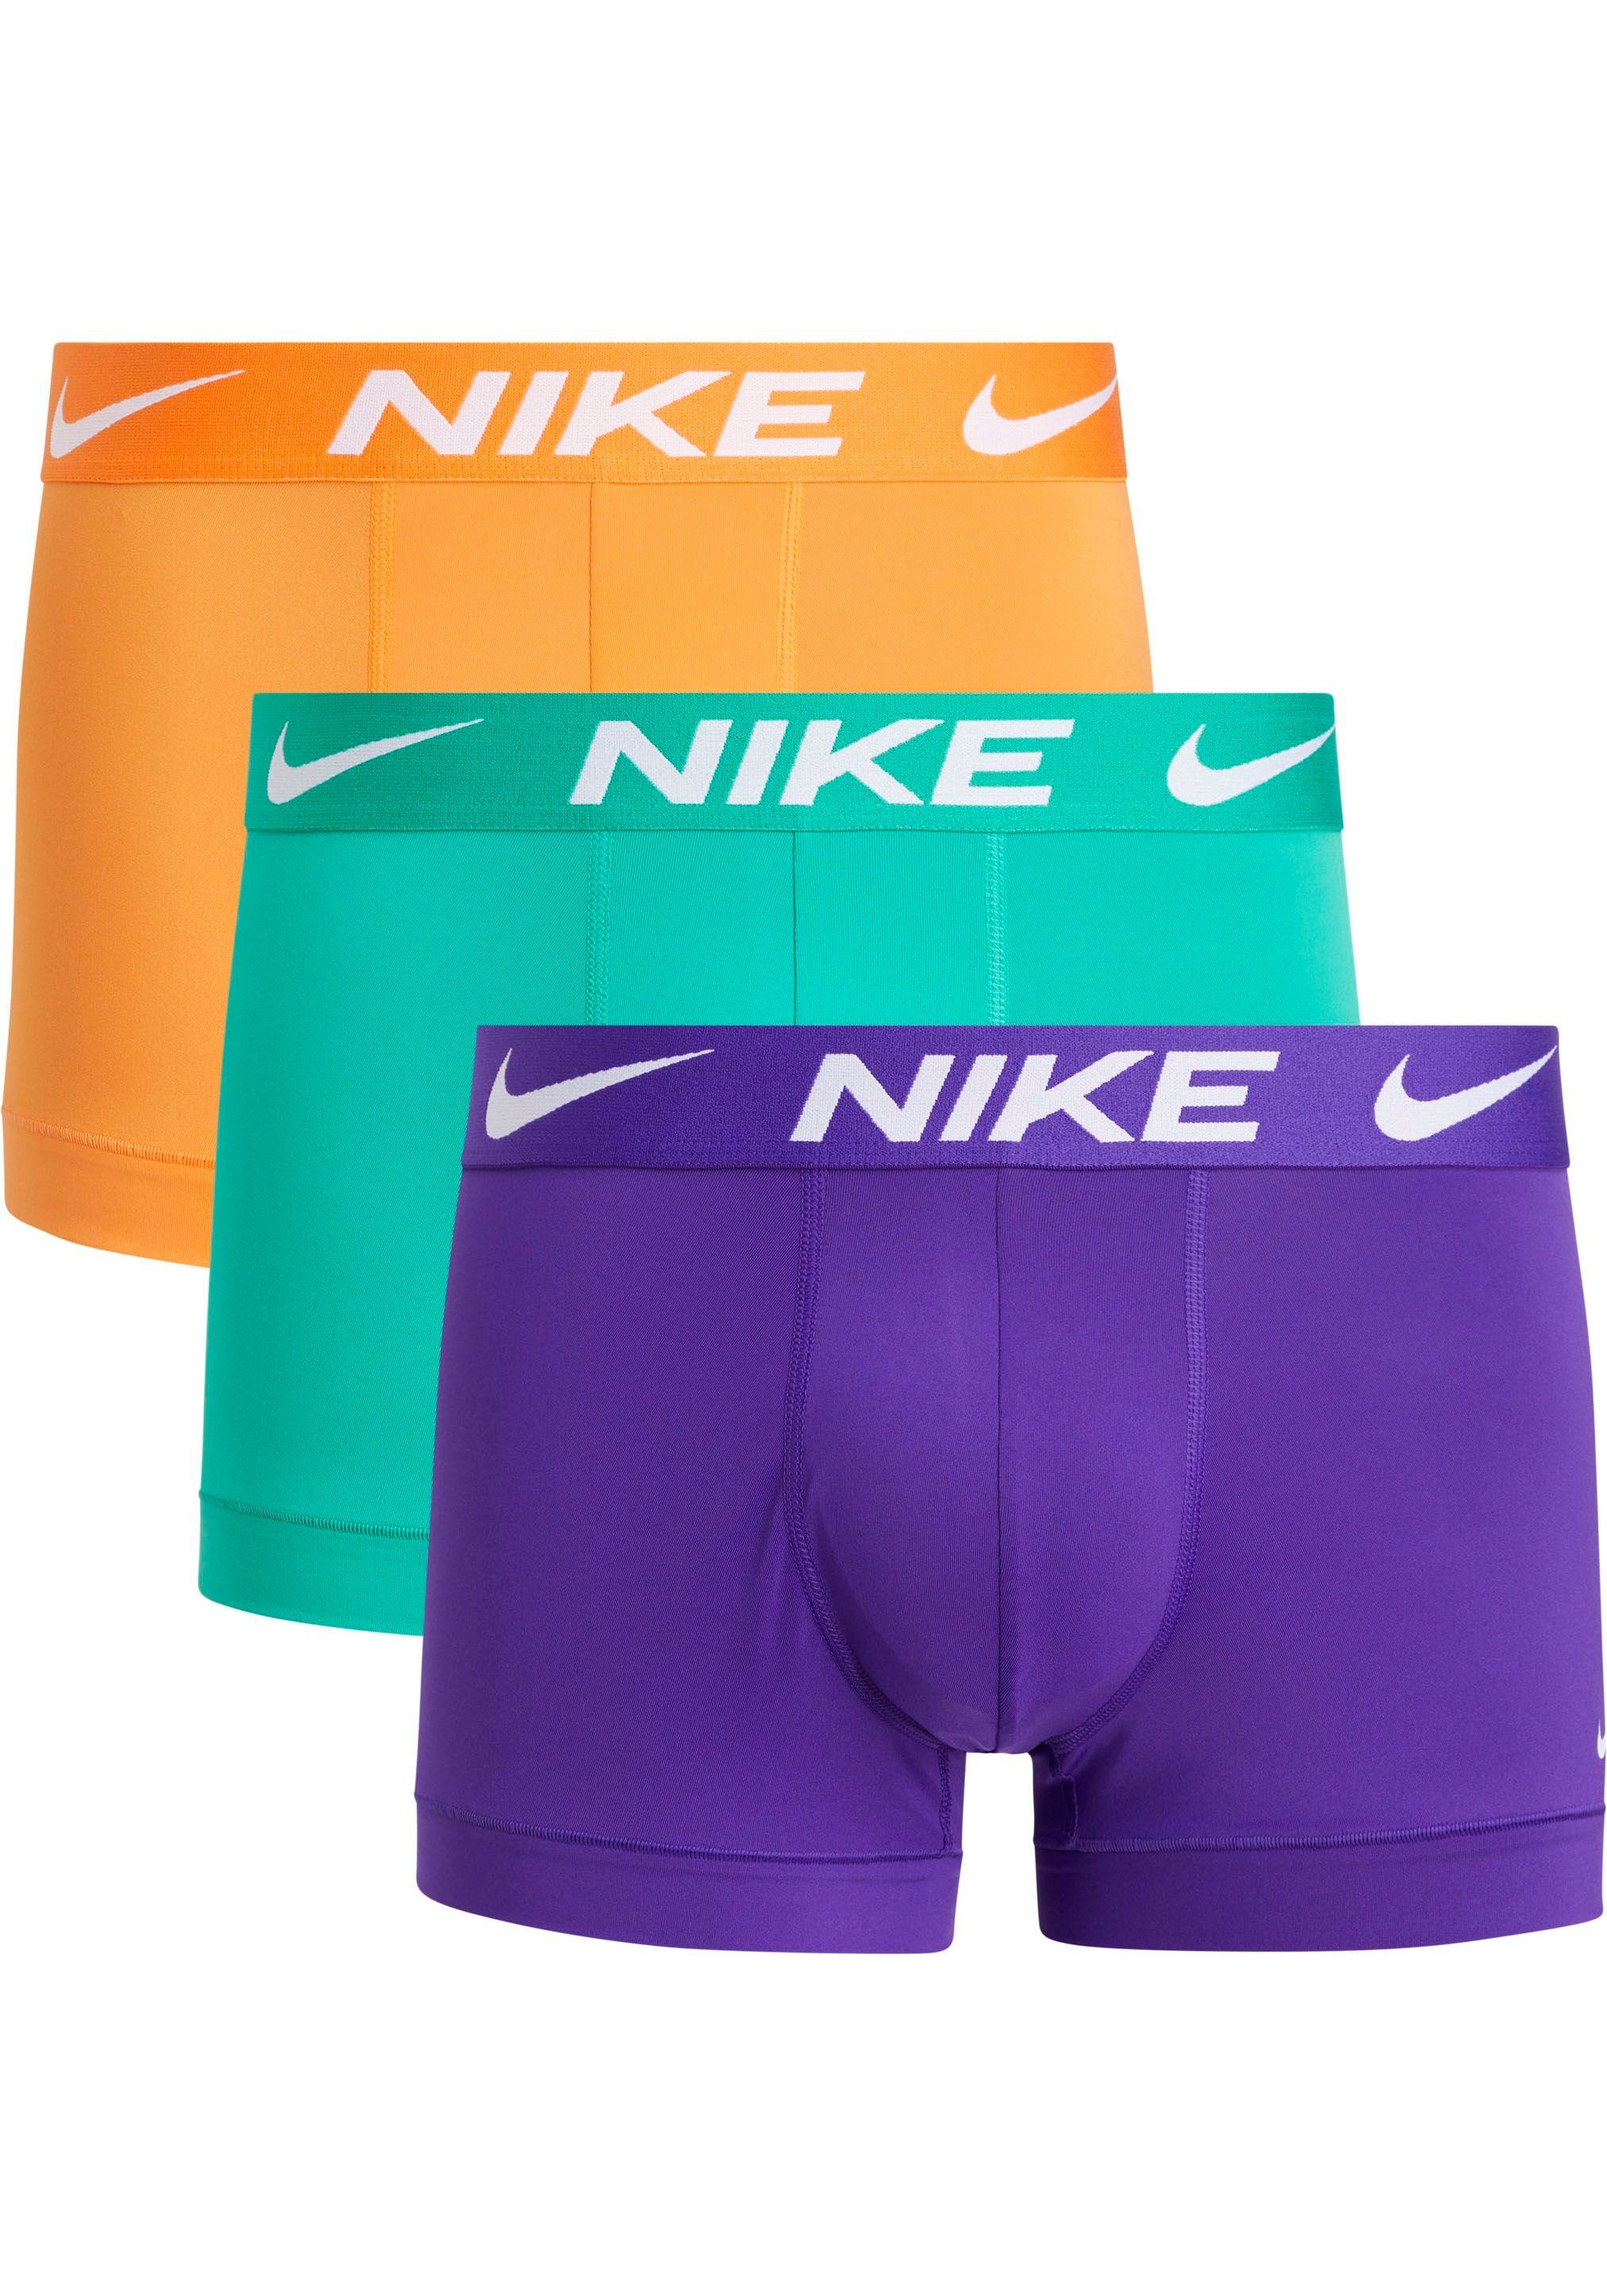 NIKE Underwear Trunk TRUNK 3PK (Packung, 3er-Pack) mit NIKE Logo-Elastikbund (3 Stück) FLD_PRPL/BRGHT_MNDRN/STDM_GRN | Boxer anliegend